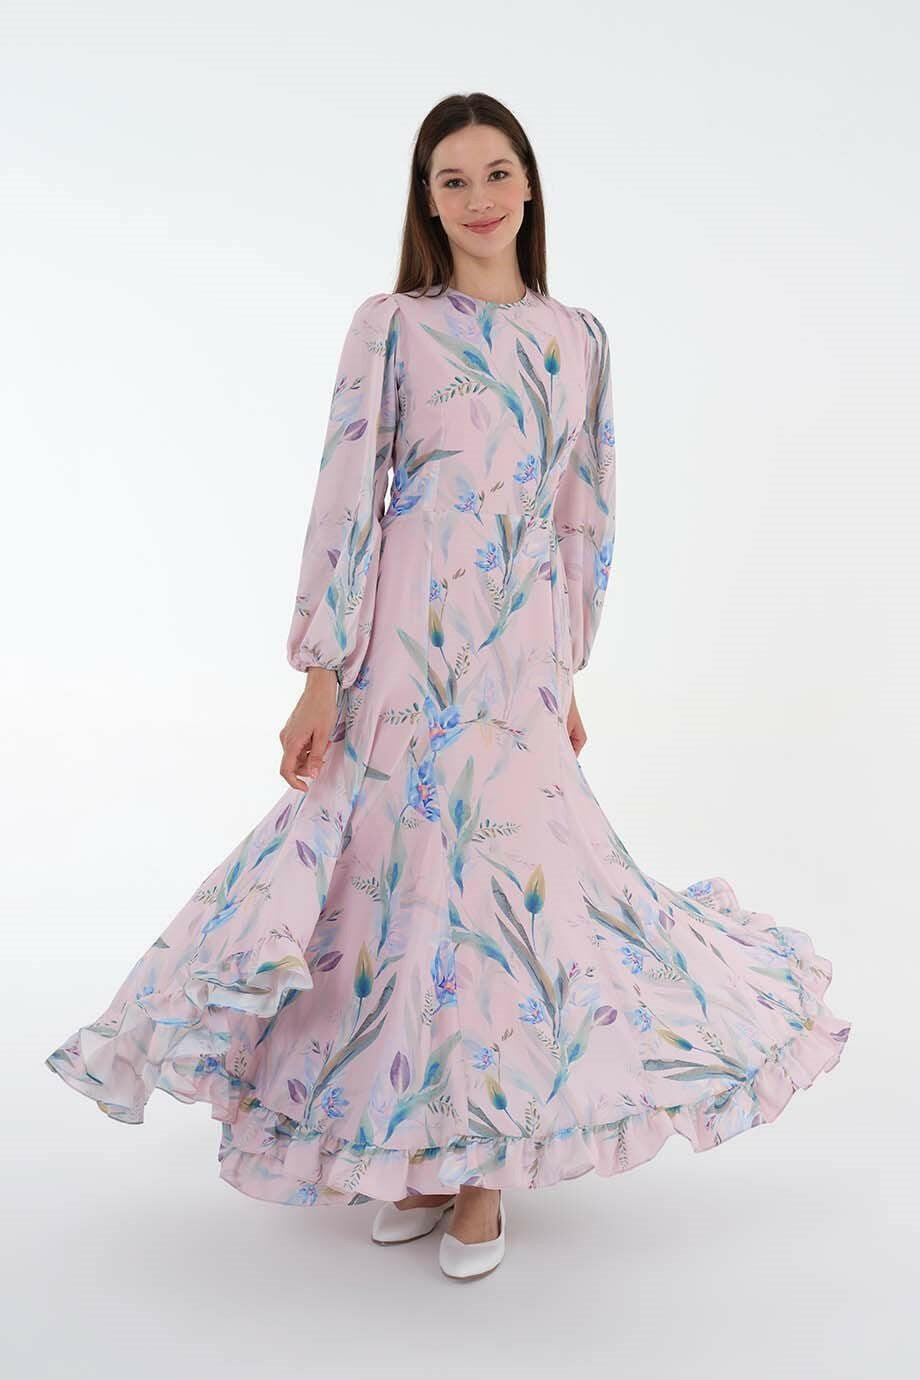 Freya Dress - The perfect modest dress for summer - By Baano